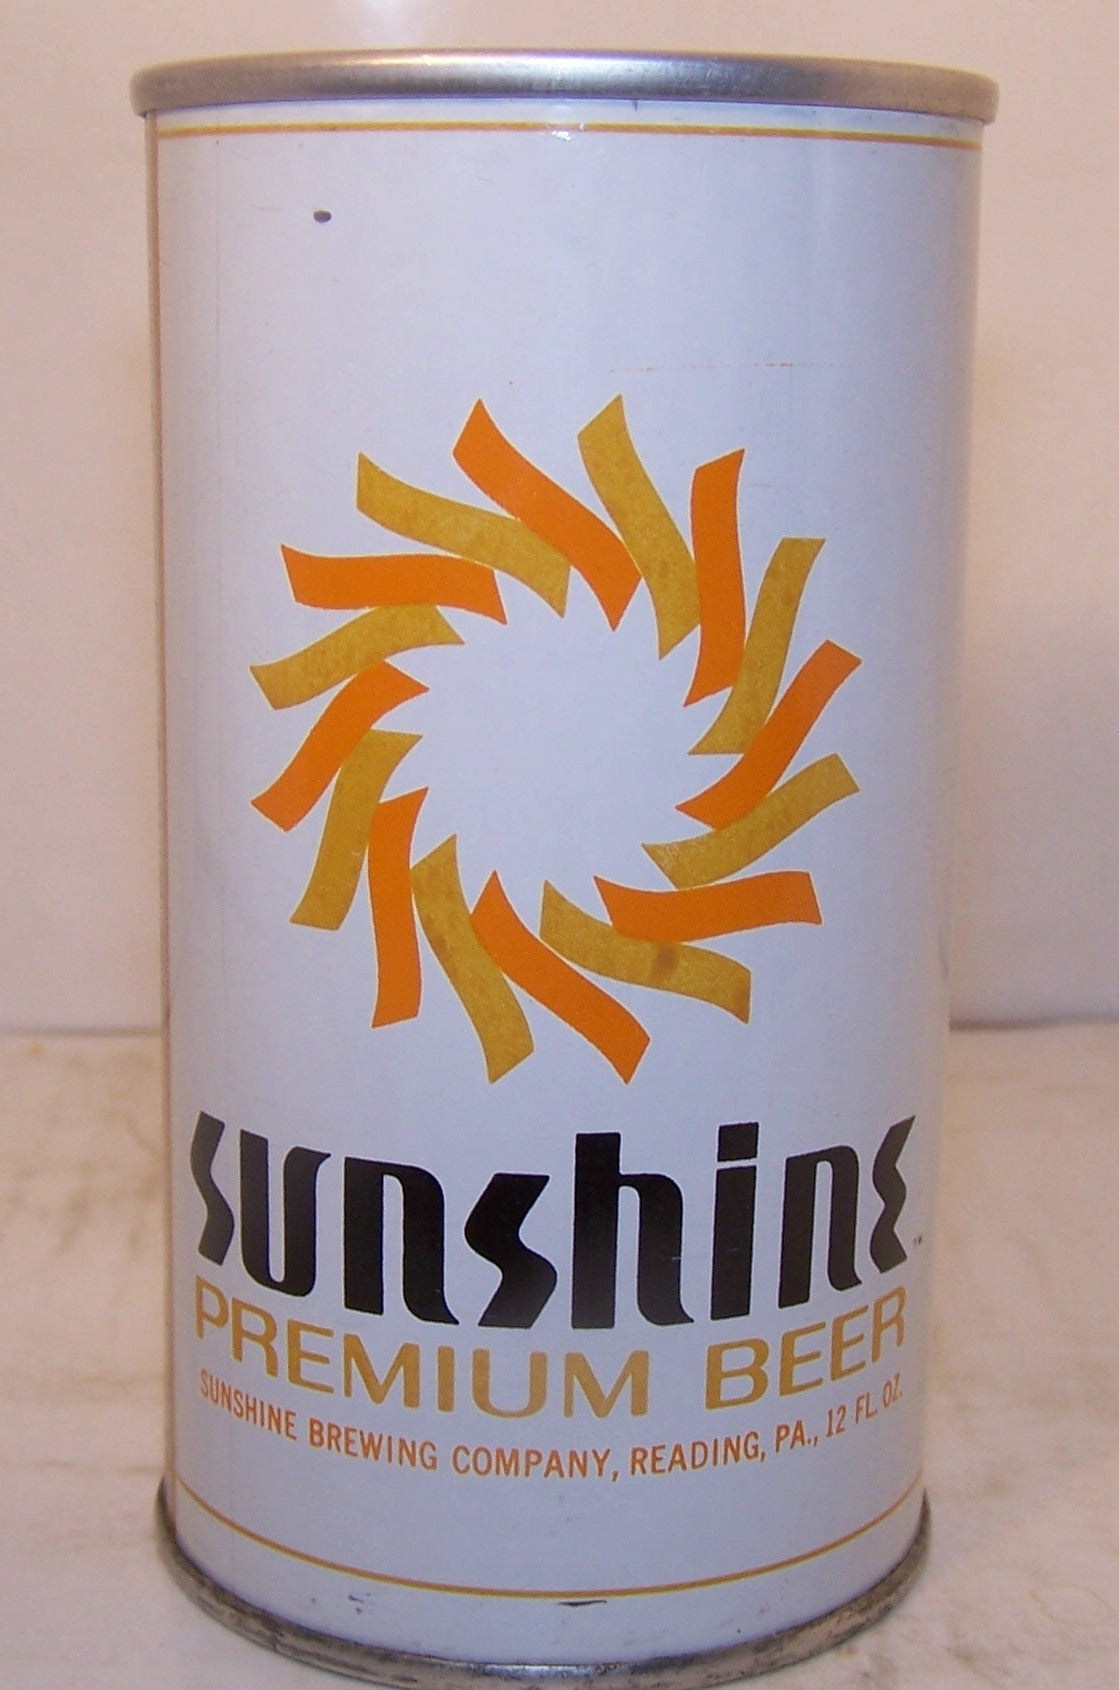 Sunshine premium beer fan tab, USBC II 129-24, grade 1/1+ Sold on 5/11/15